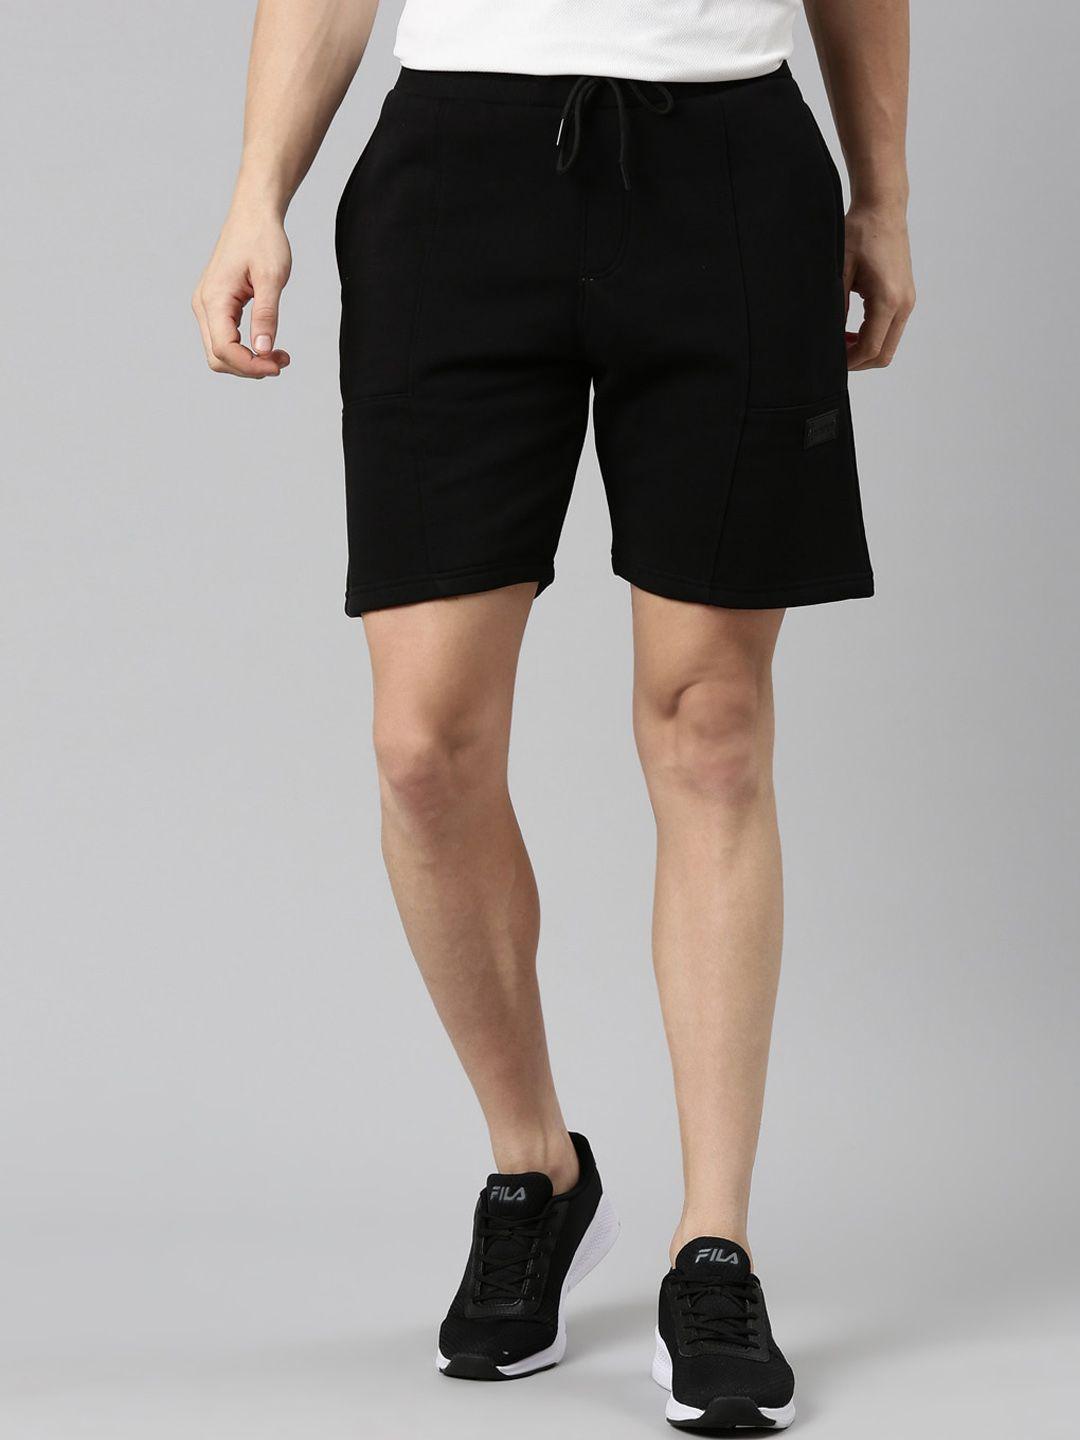 fila-madagascar-cotton-sports-shorts